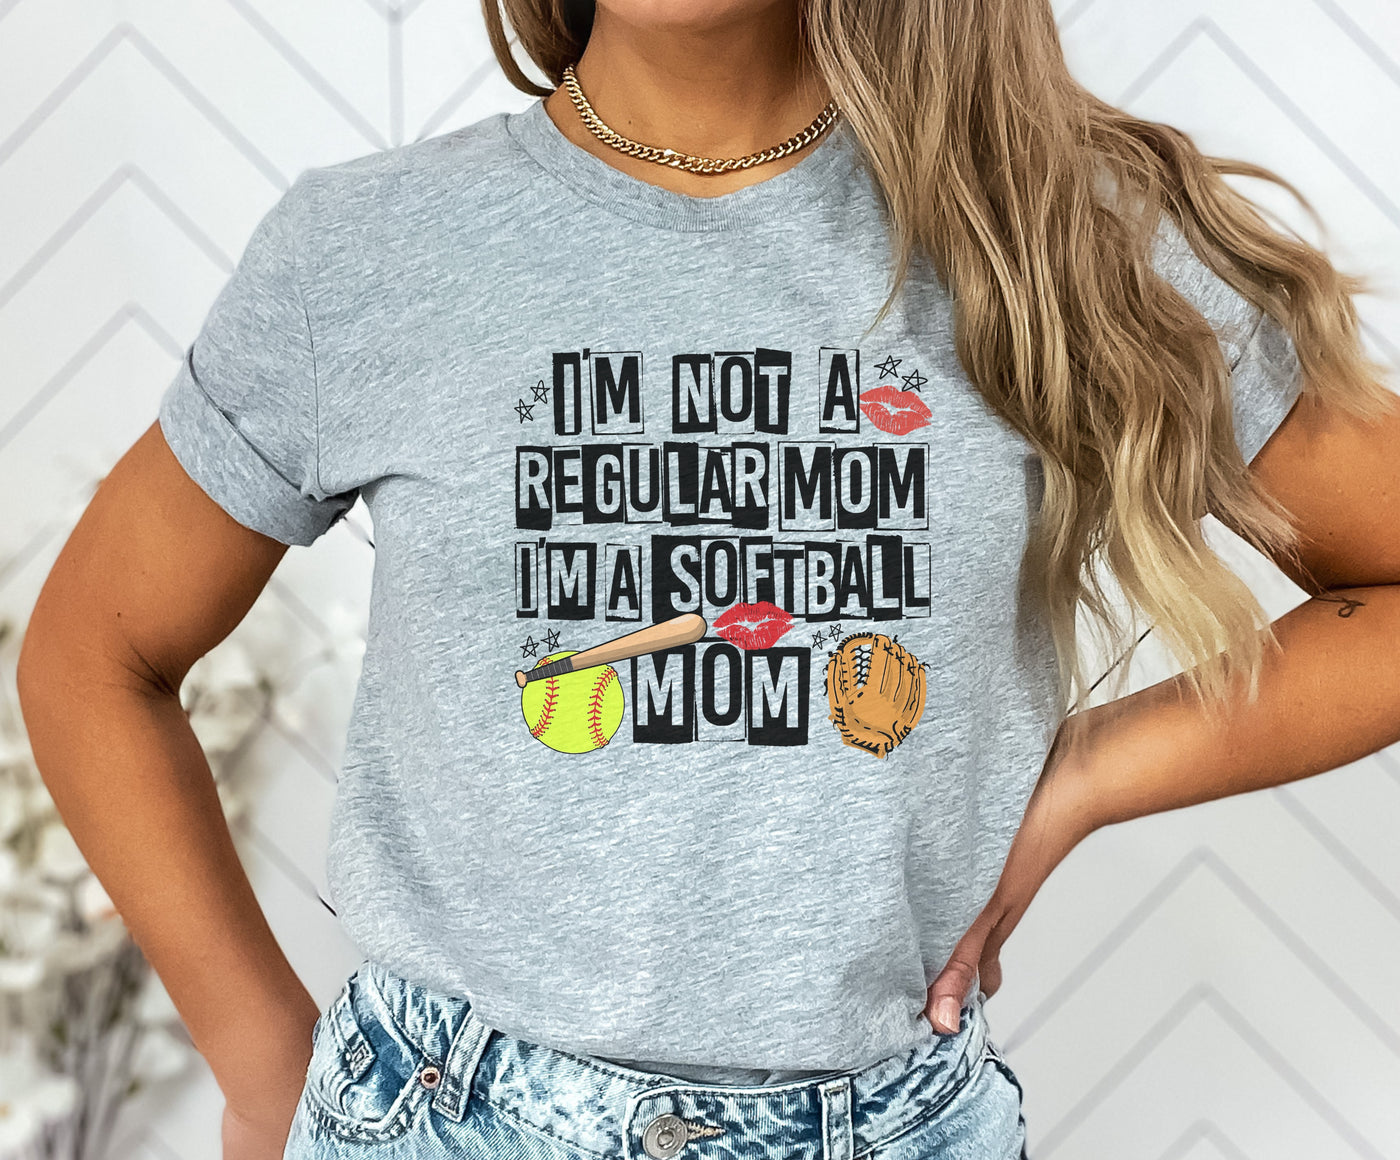 I’m not a regular mom, I’m a softball mom (RTS 1/16)